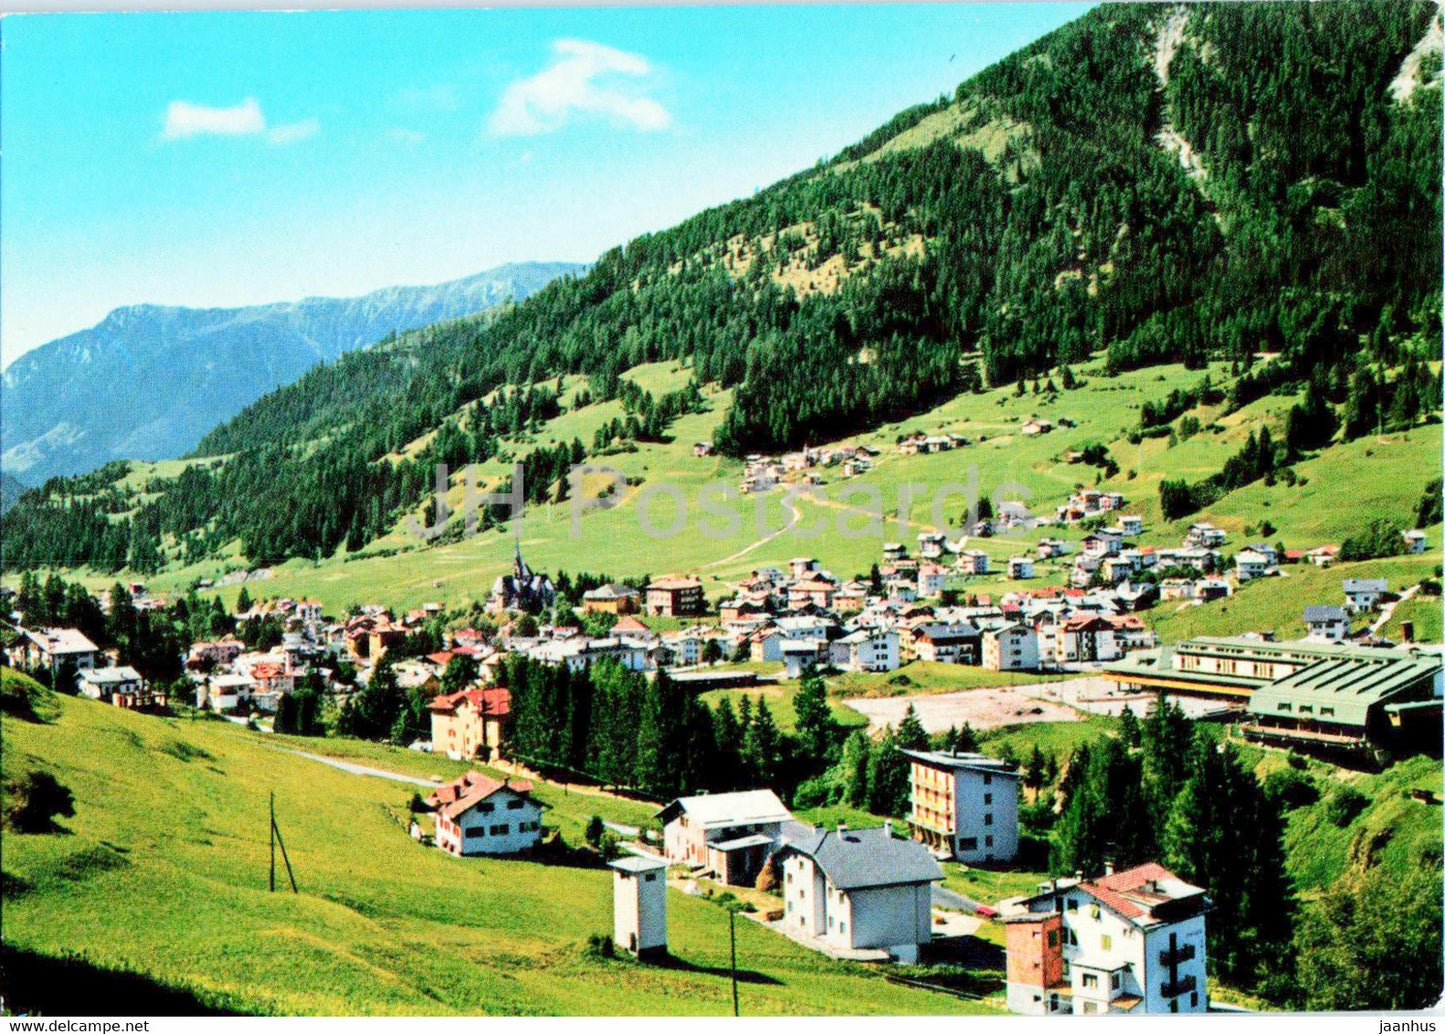 Dolomiti - Moena 1200 m - Panorama - General view - 5013 - Italy - unused - JH Postcards